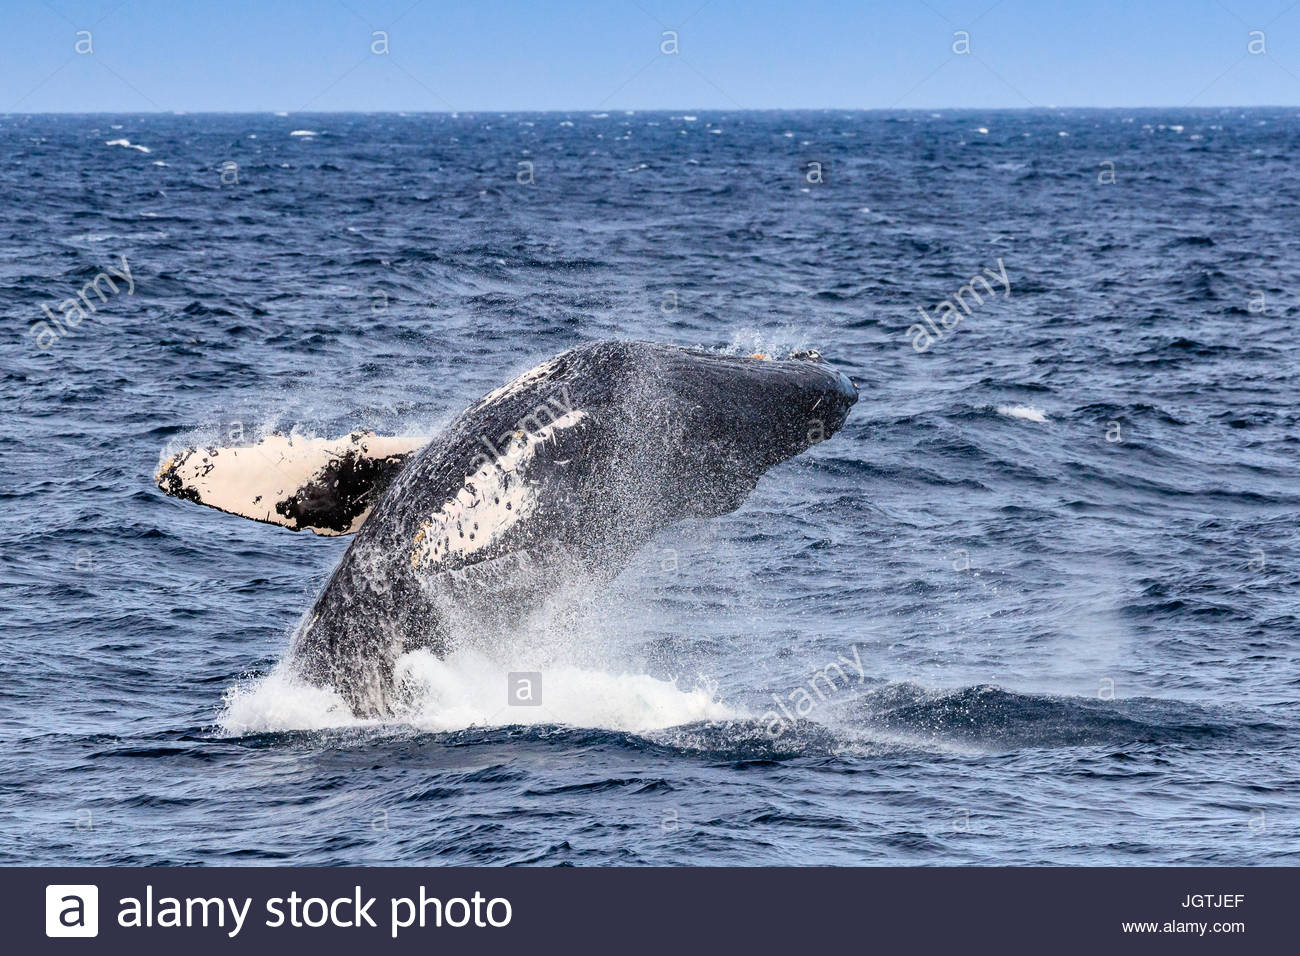 Breaching behavior of a humpback whale, Megaptera novaeangliae. Stock Photo